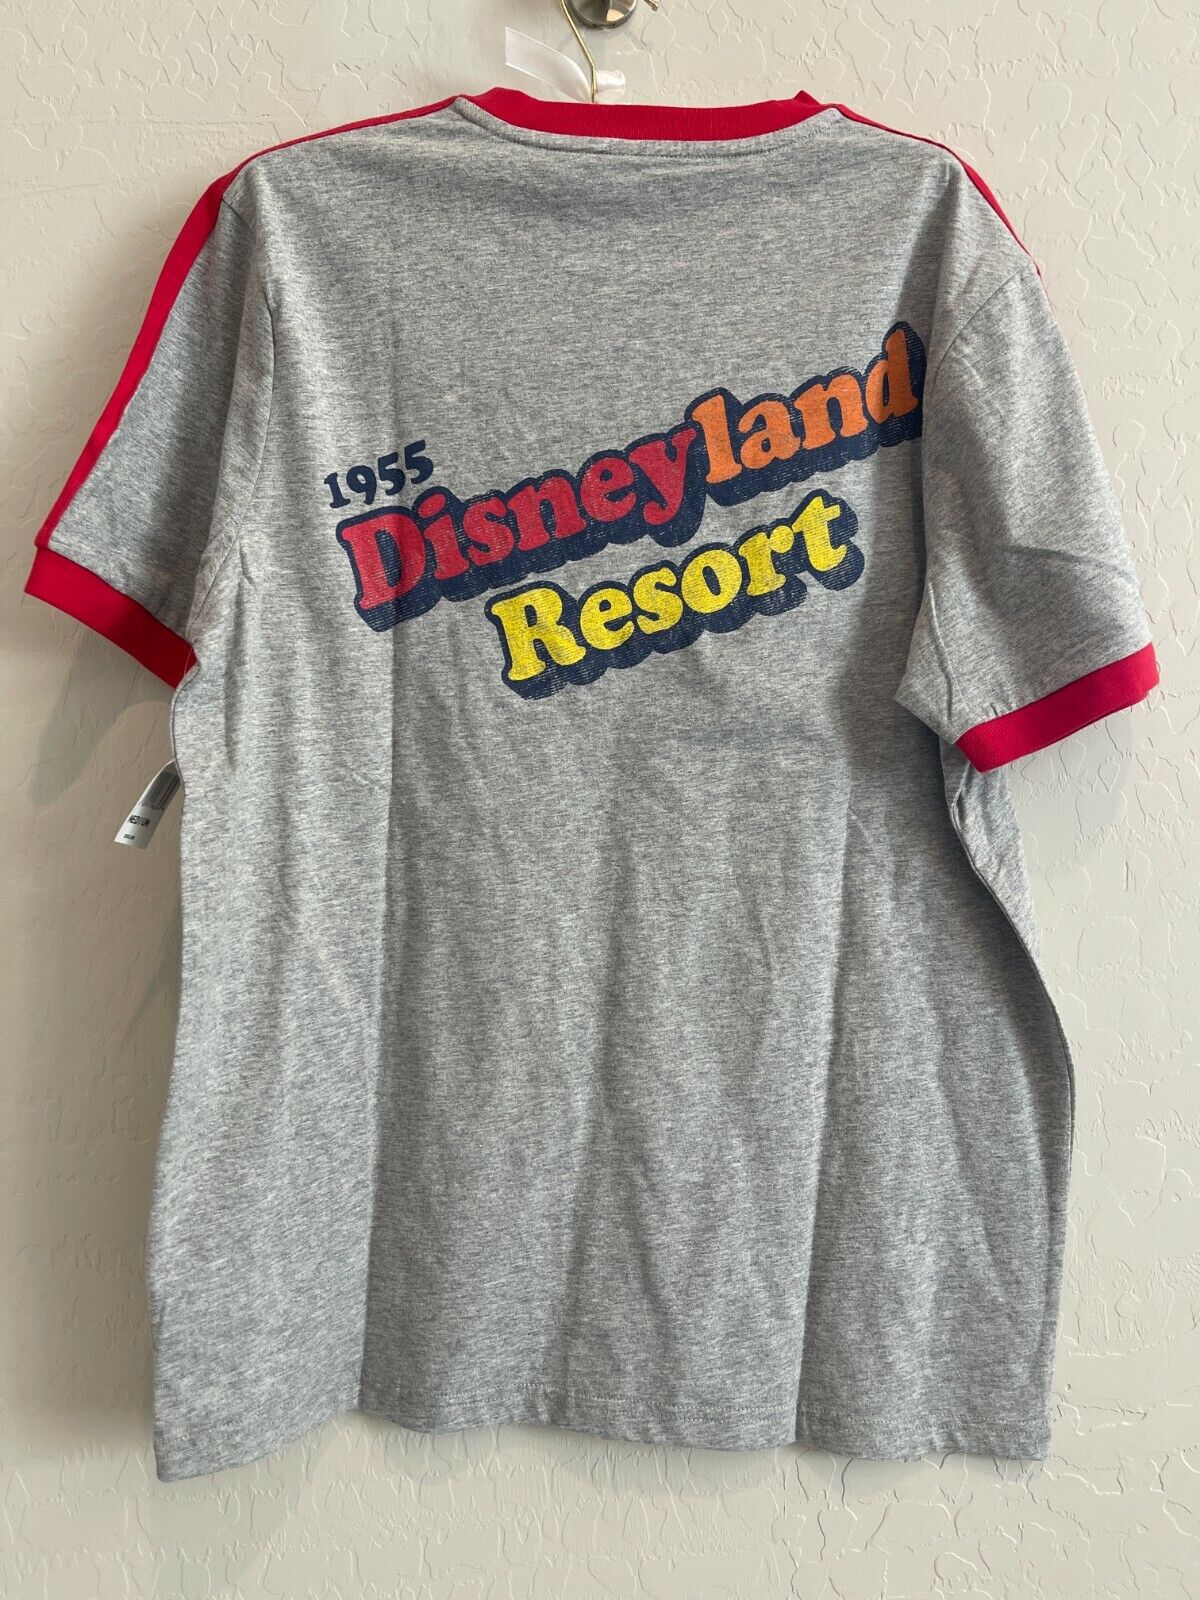 NWT Disneyland Resort 55 1955 Retro Disney Parks Adult Tee T-Shirt Shirt SZ XL